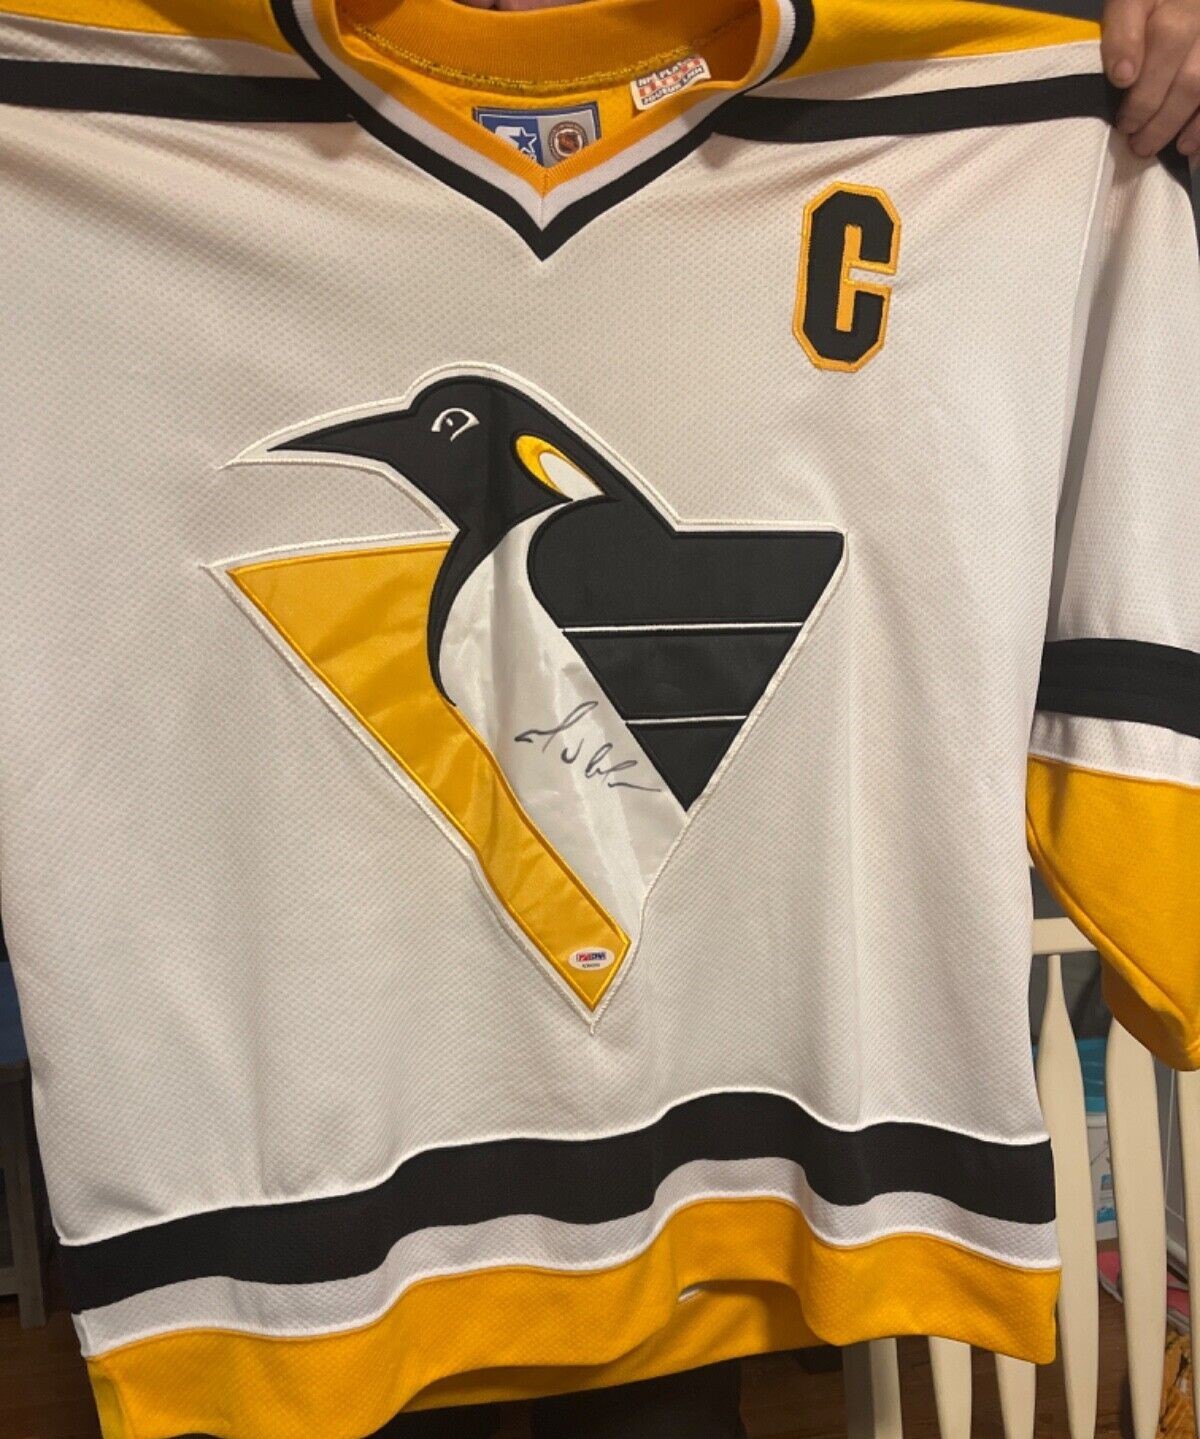 Mario Lemieux  Autographed Hockey Memorabilia & NHL Merchandise